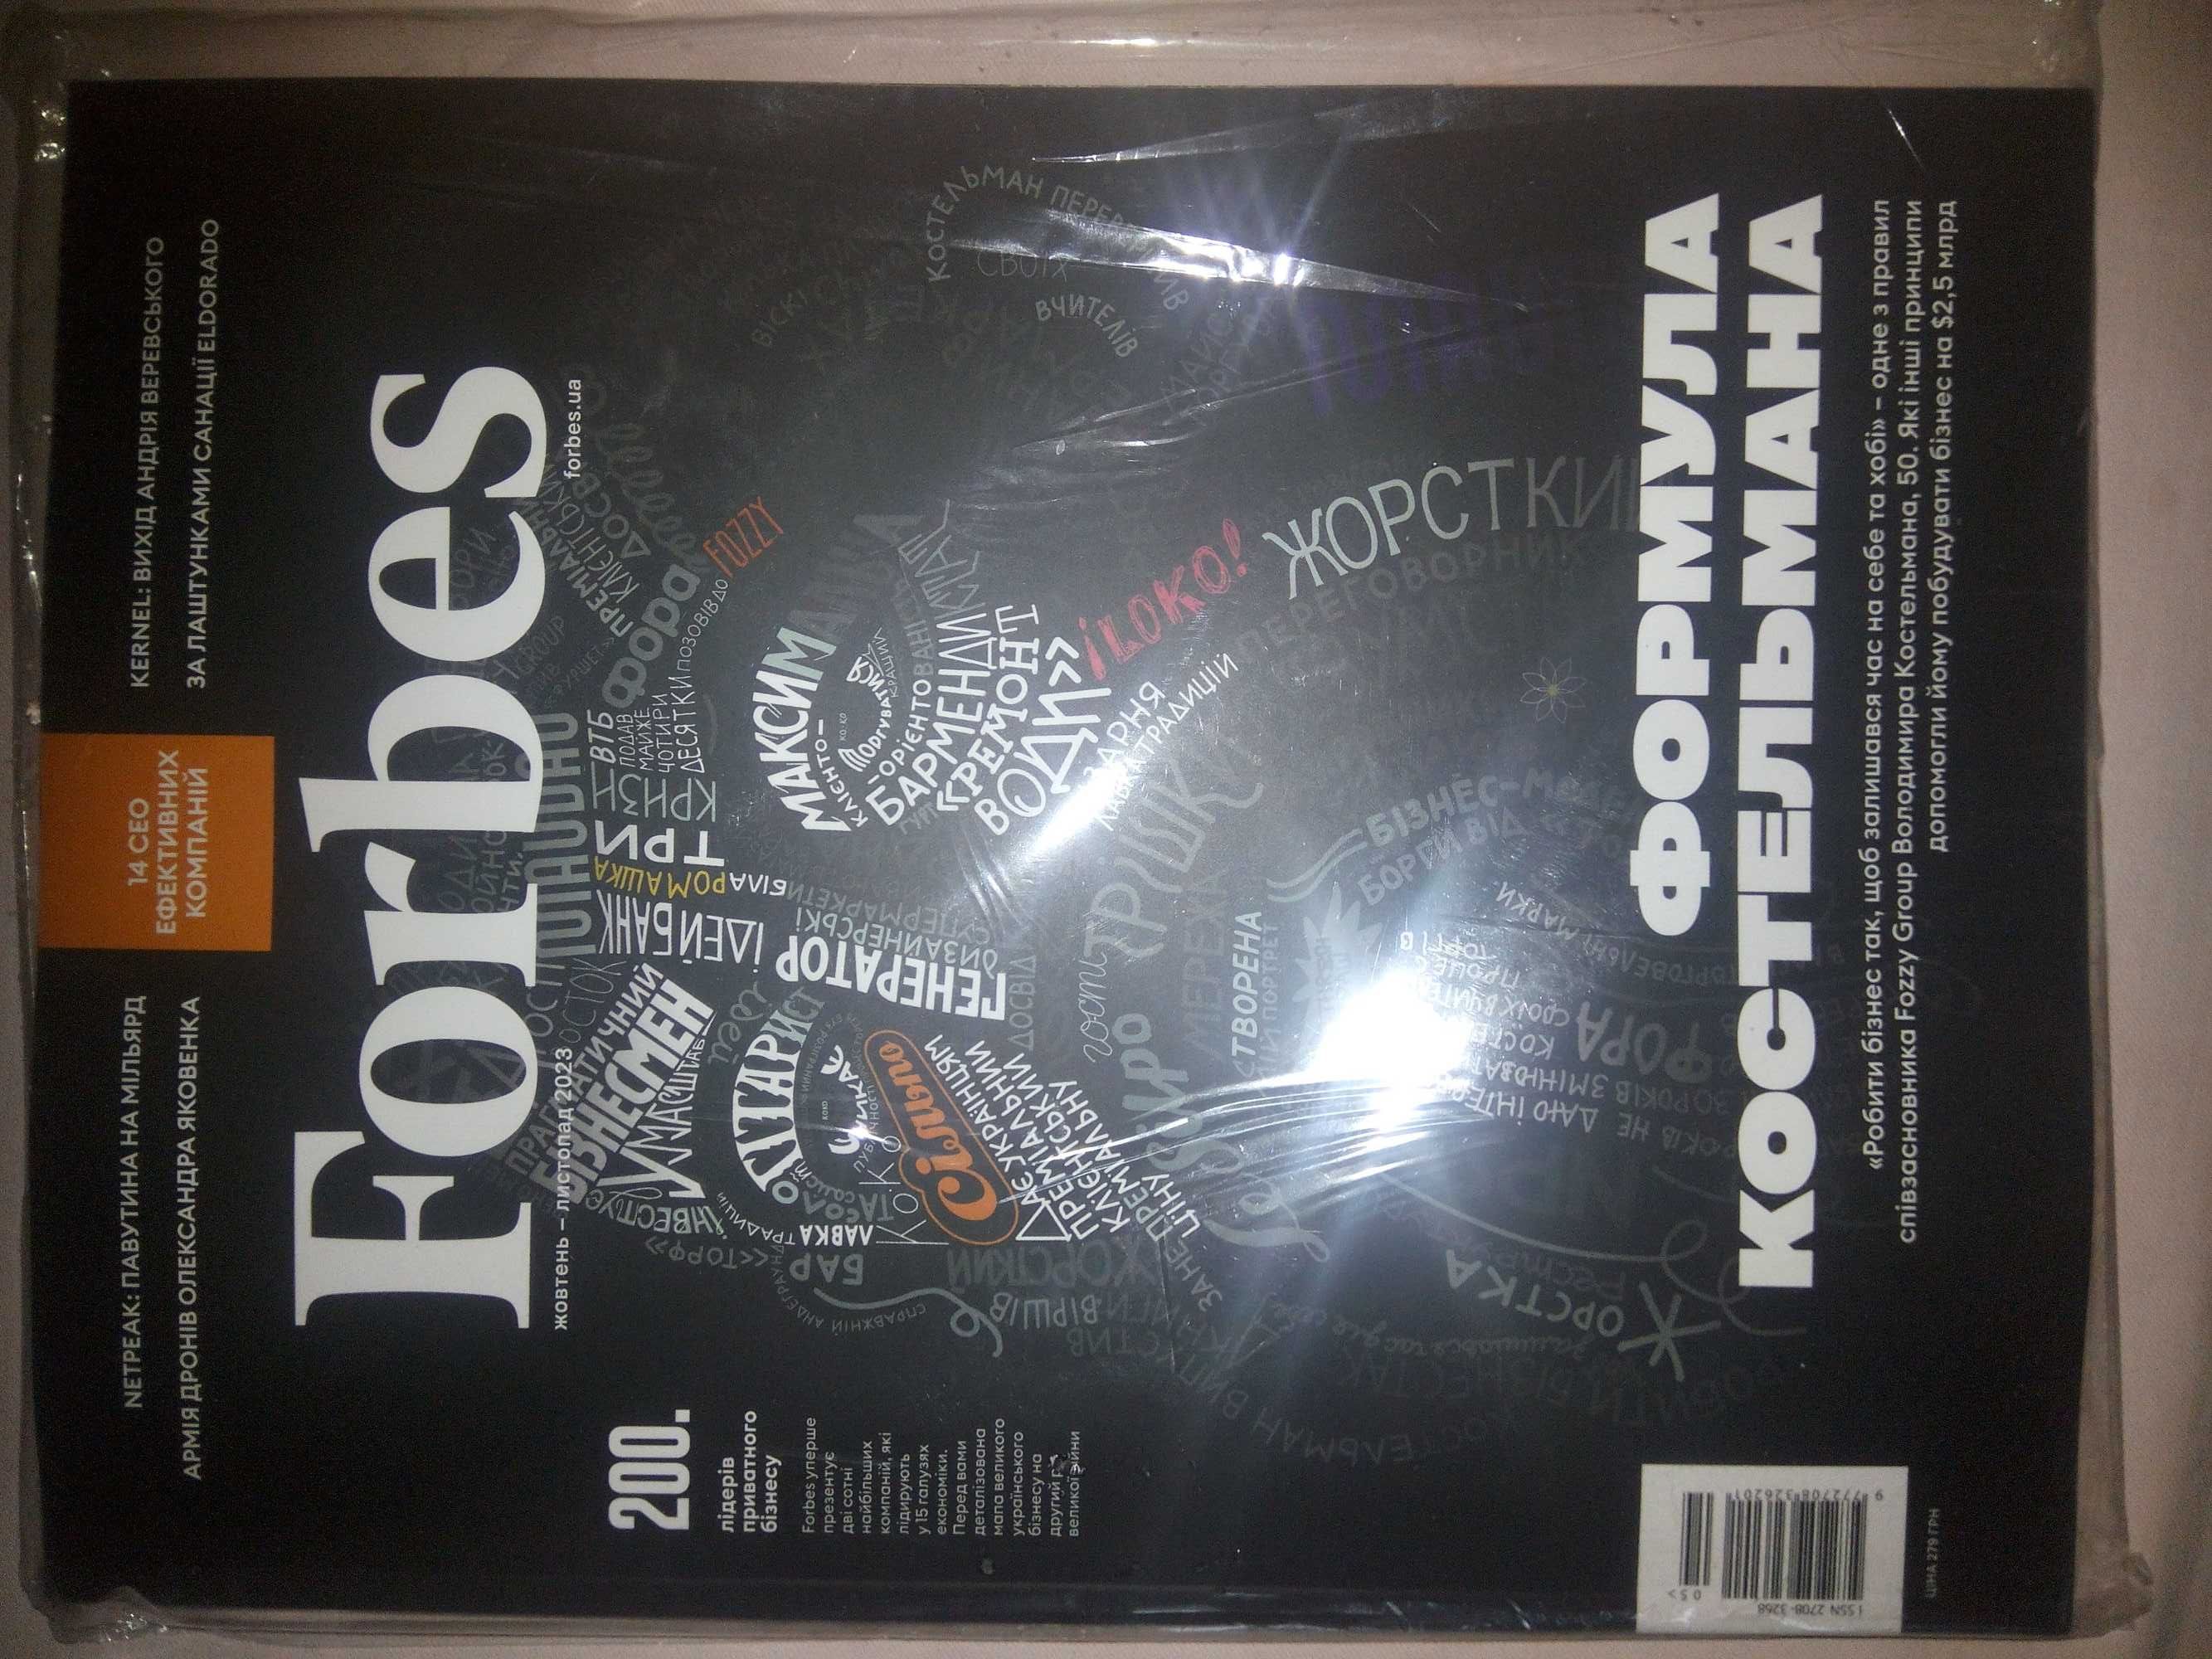 Журнал Forbes 02-03, 10-11